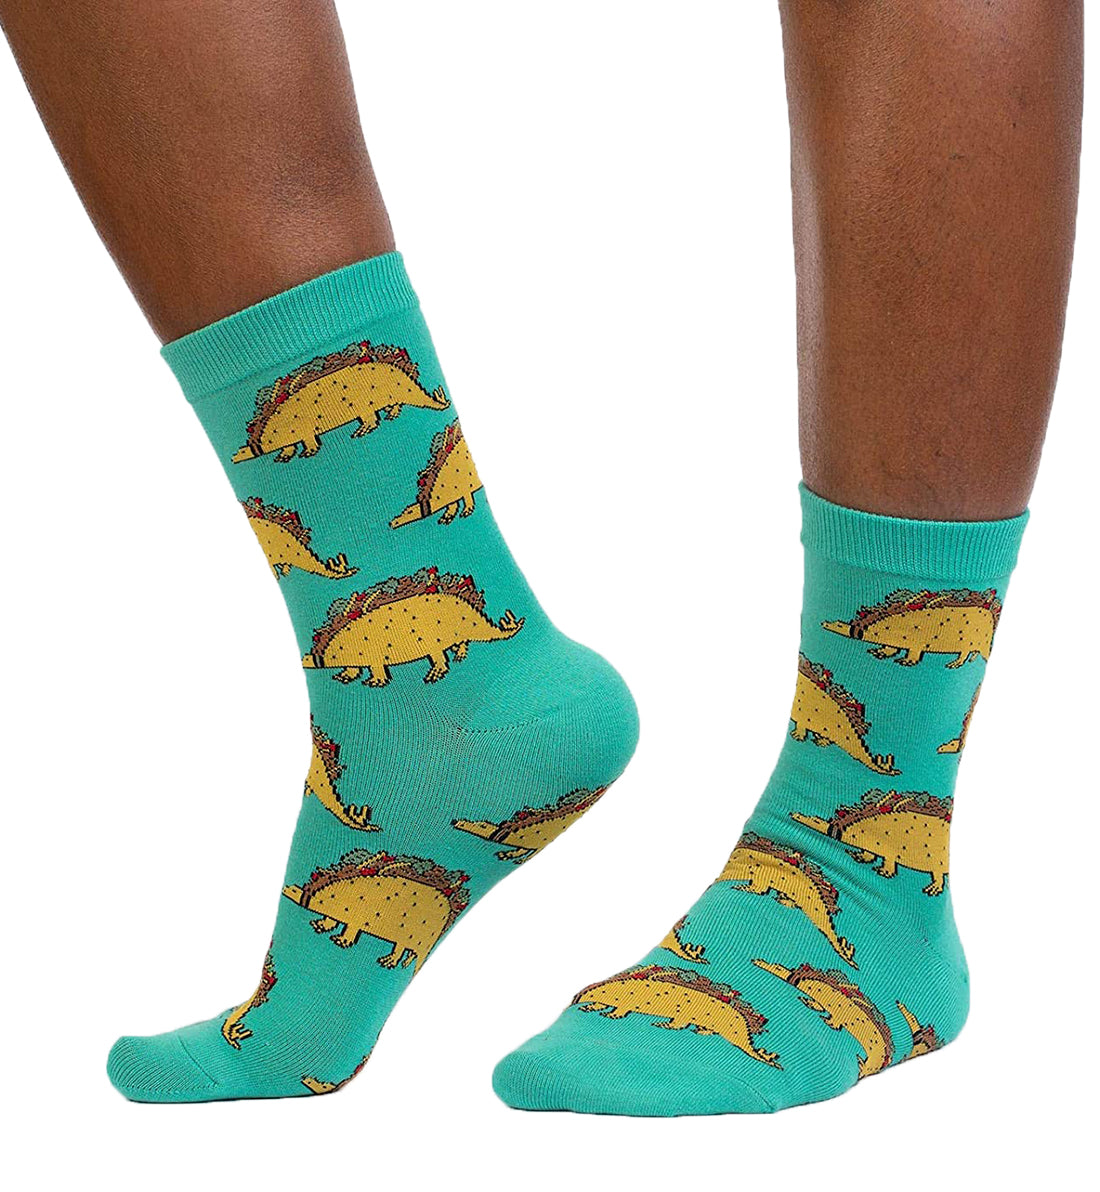 SOCK it to me Women's Crew Socks (w0335),Tacosaurus - Tacosaurus,One Size